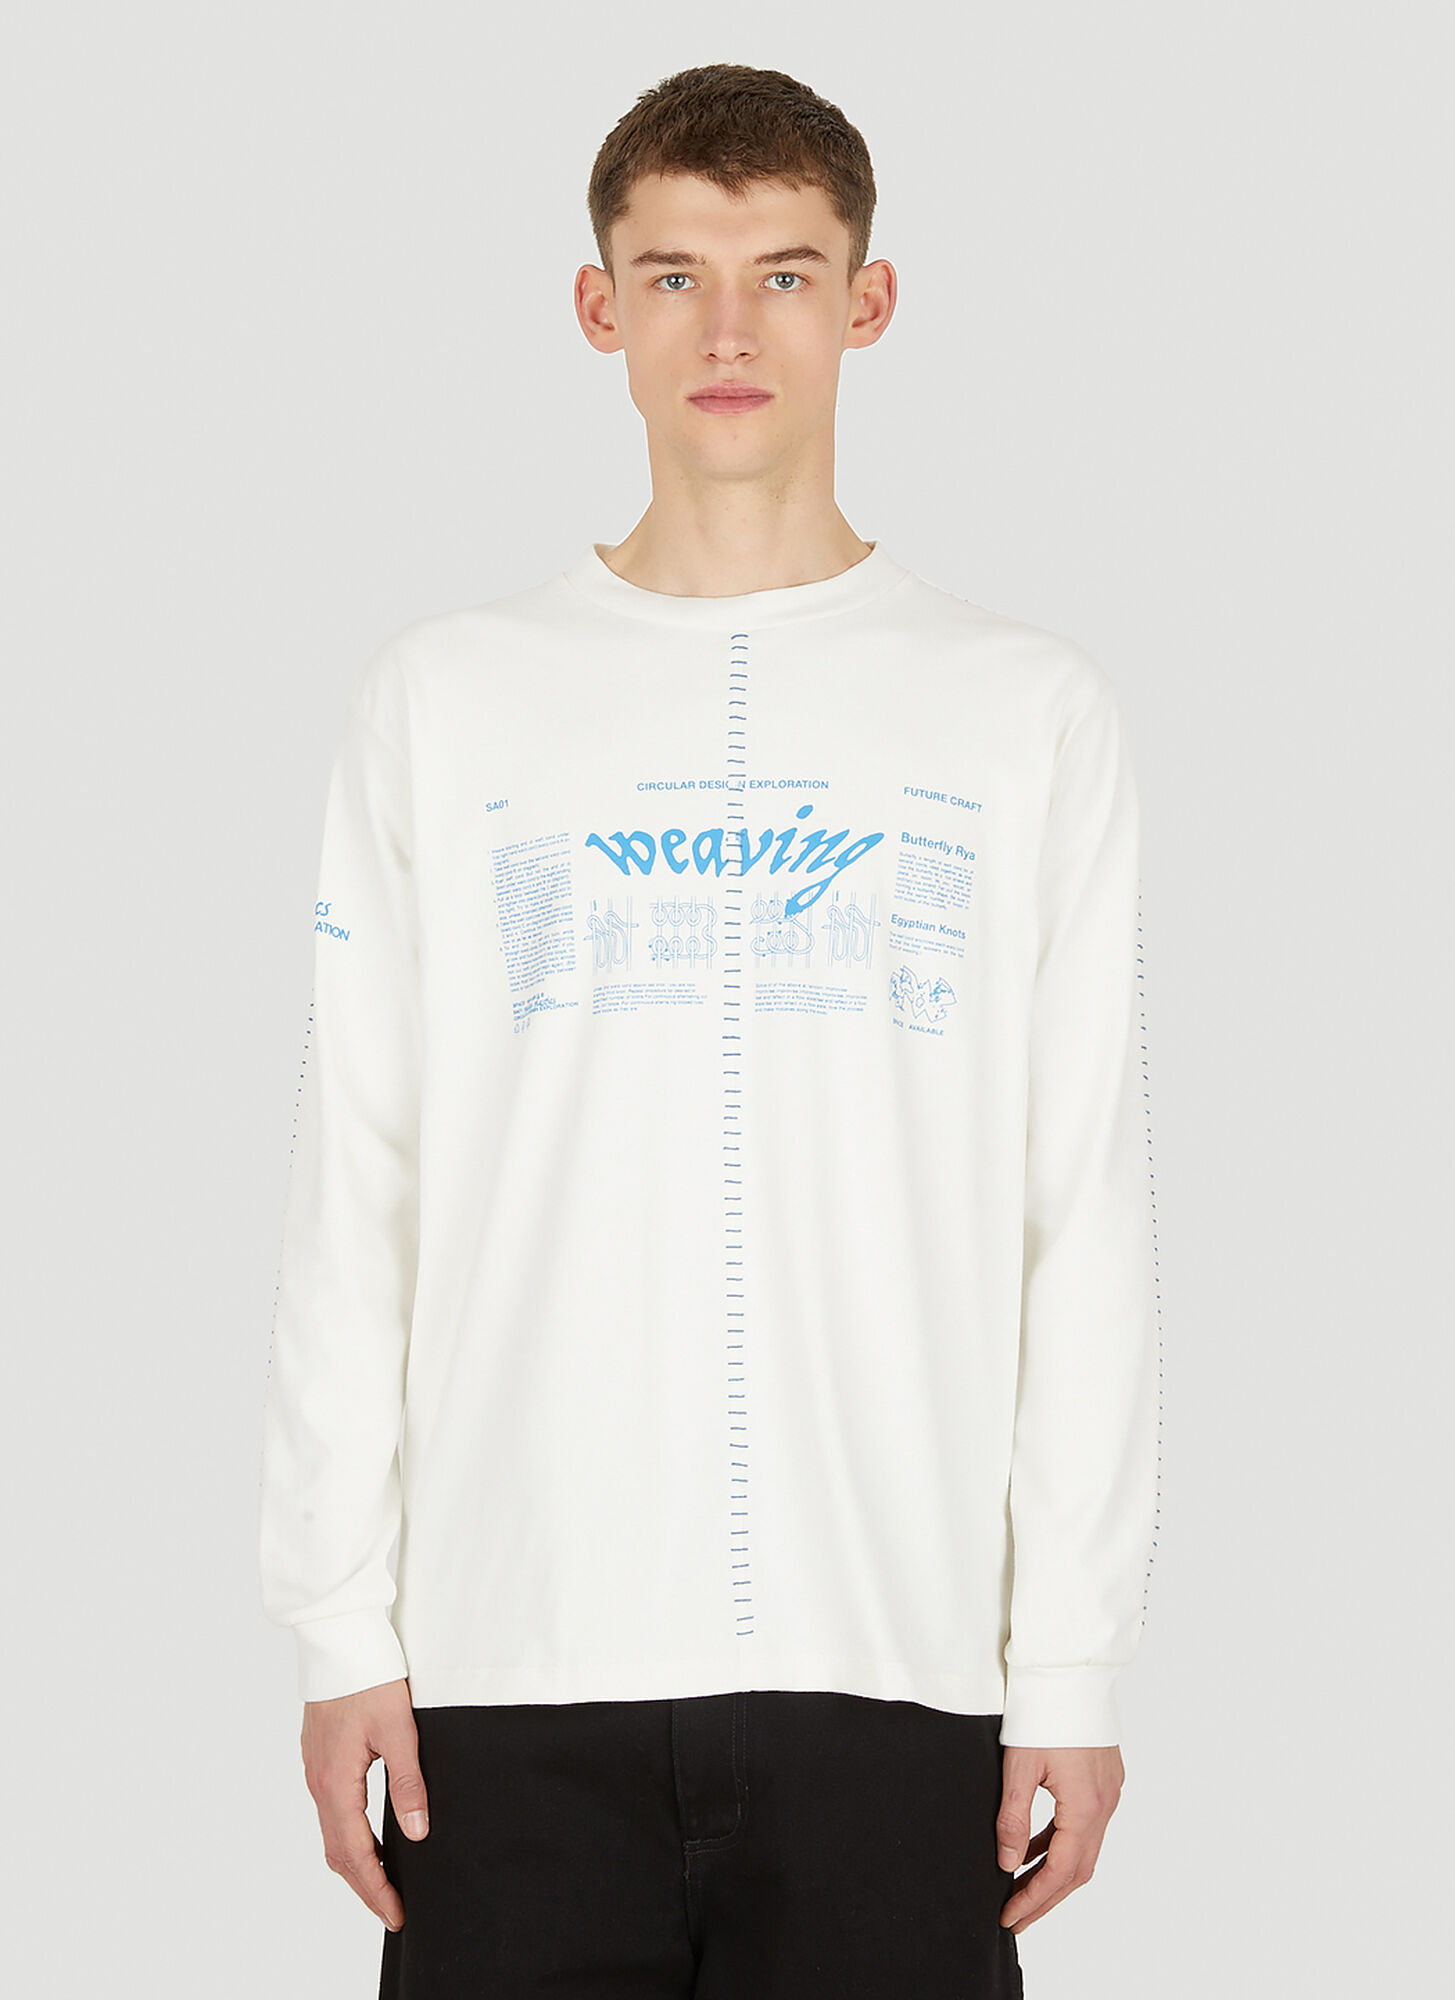 Space Available Artisan Weaving T-shirt Unisex White